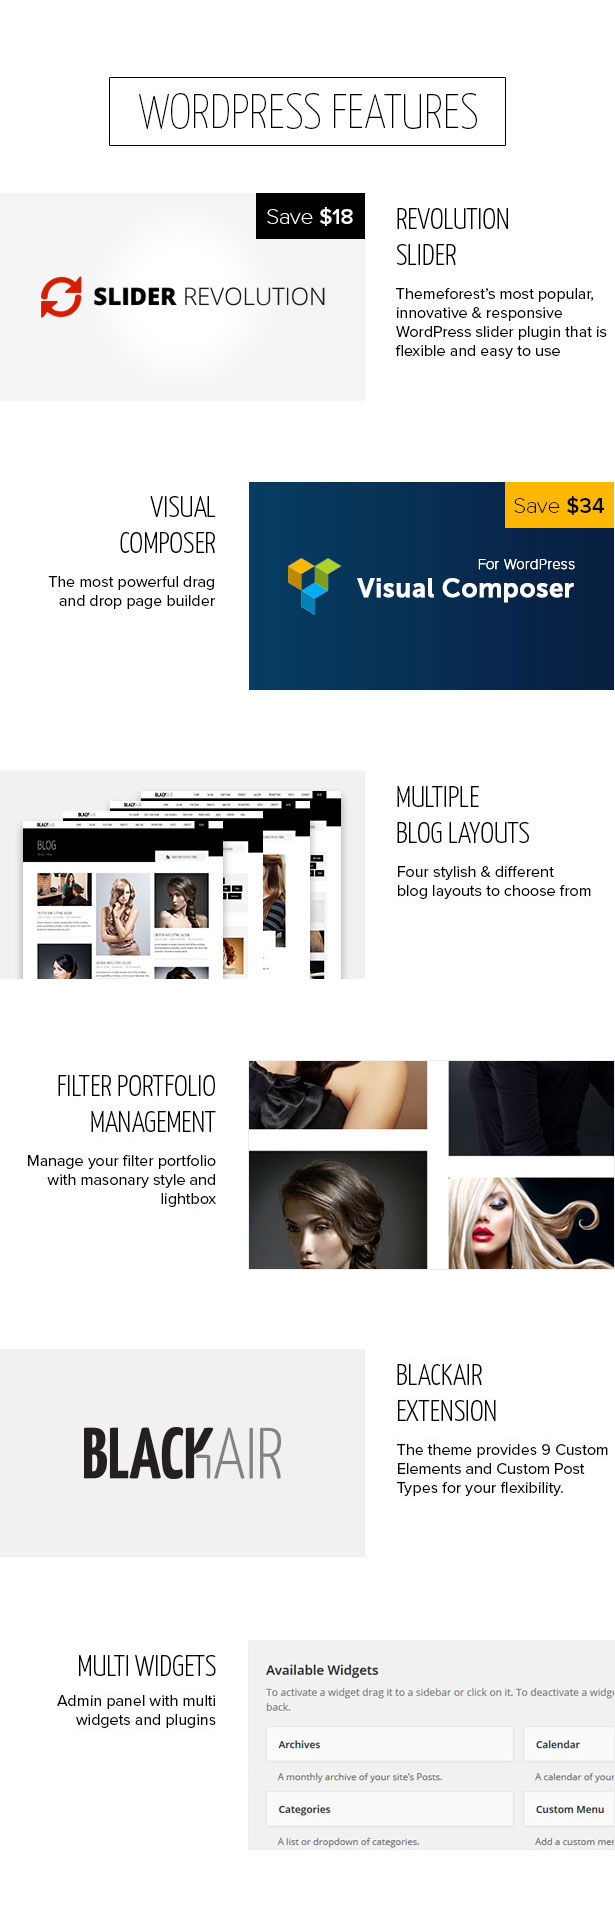 Blackair - One Page WordPress Theme für den Hair & Beauty Salon - 9